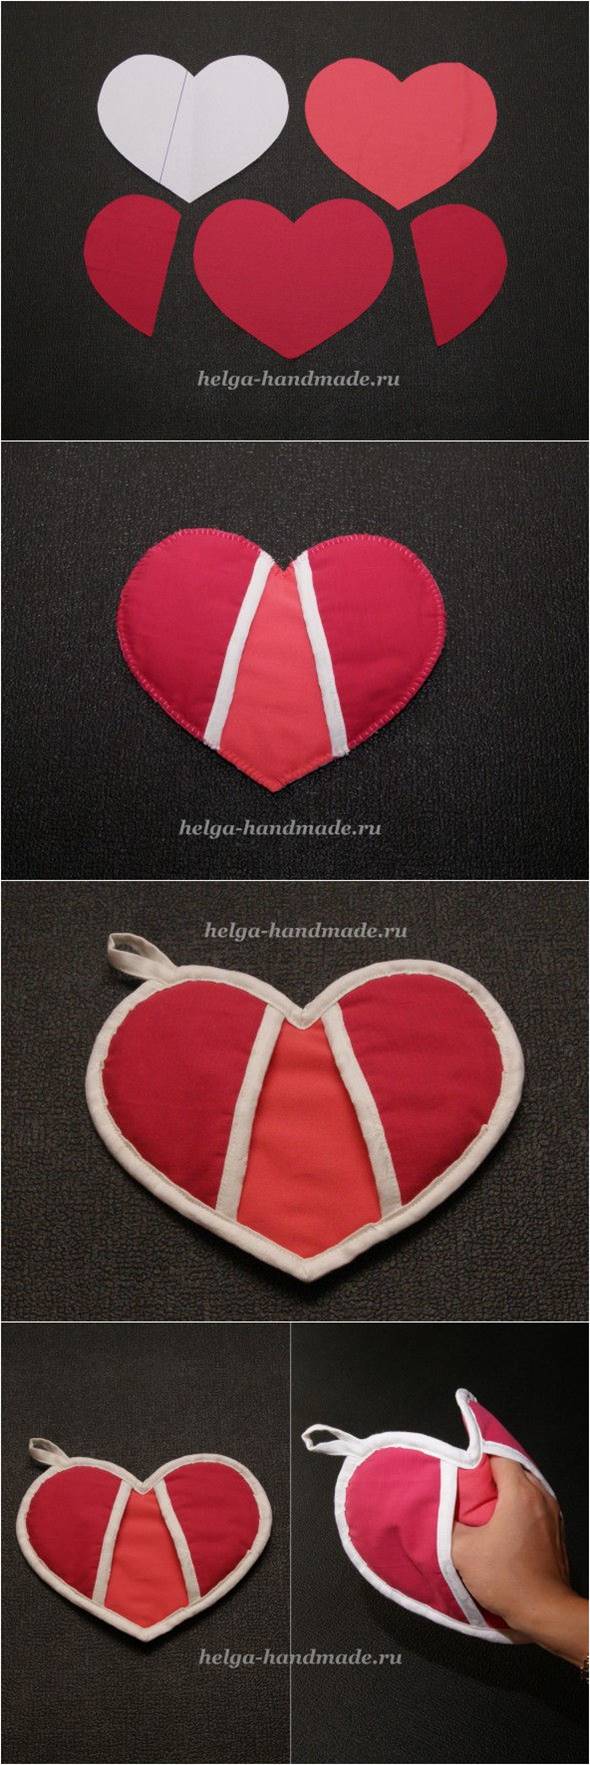 How to Make a Heart Shaped Potholder